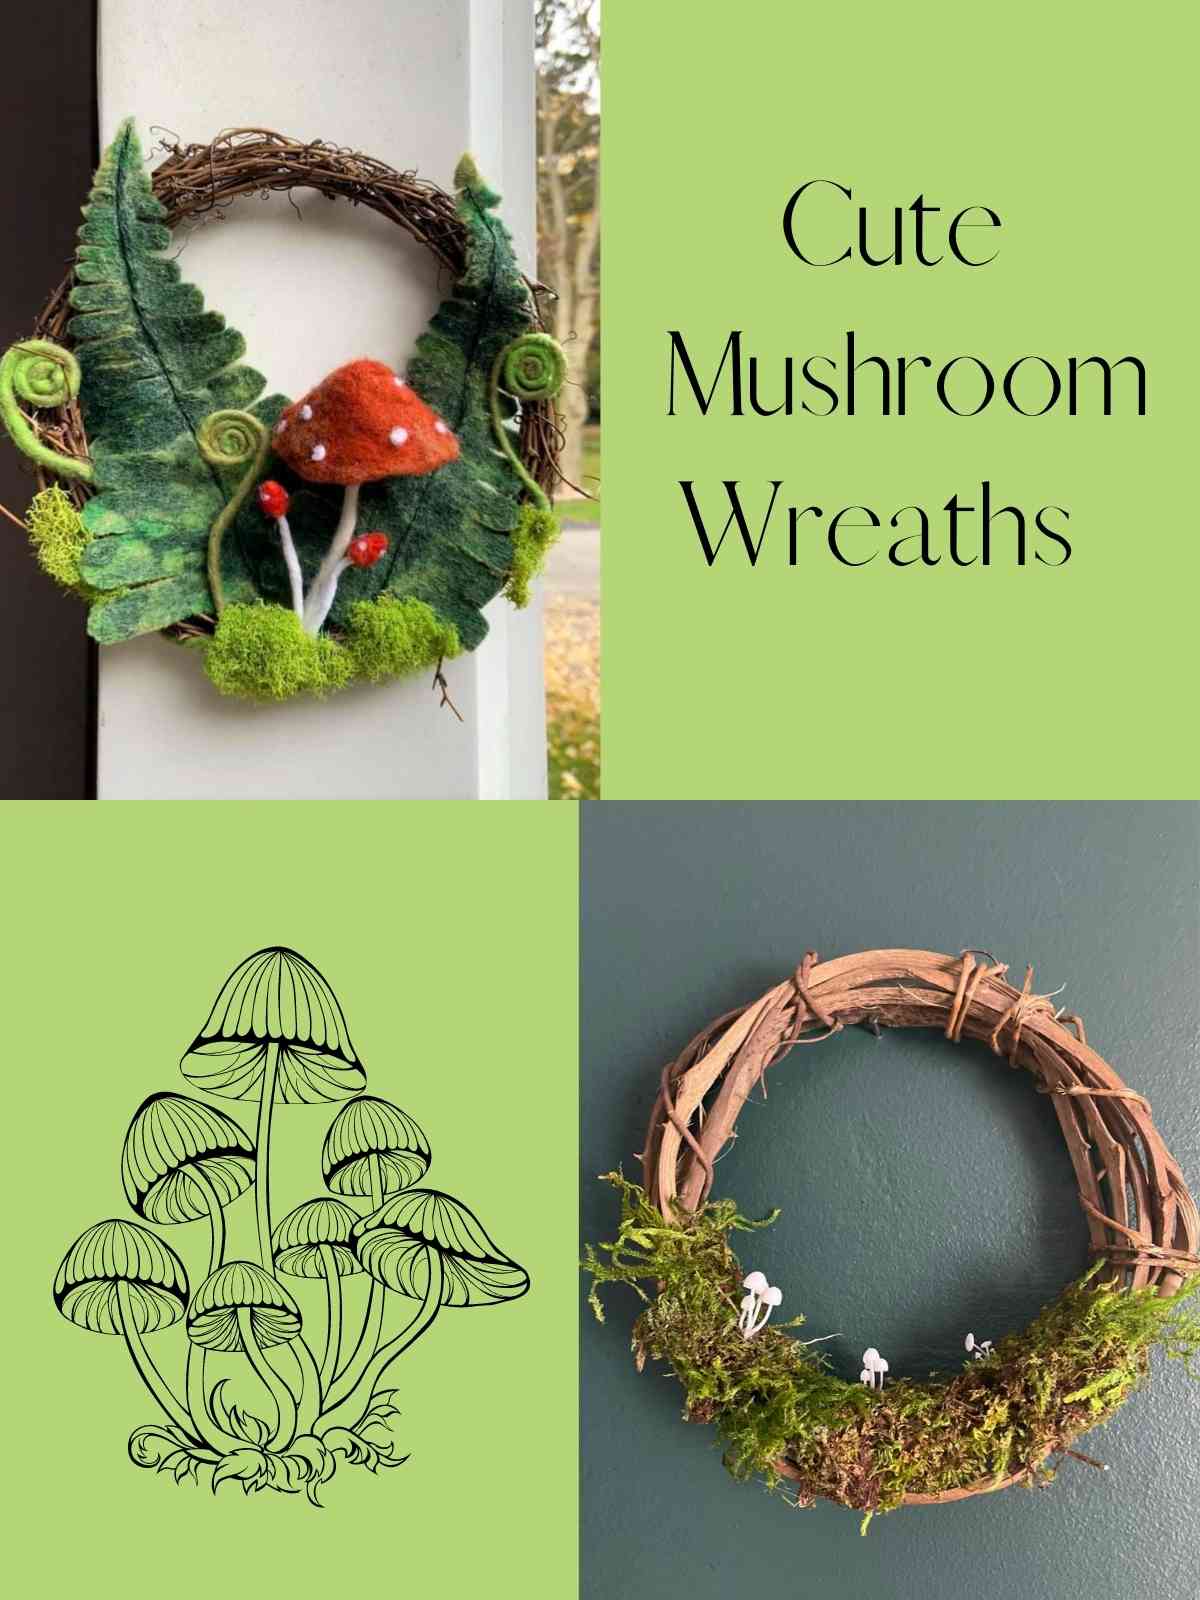 Handmade Wreaths With Moss And Mushrooms 